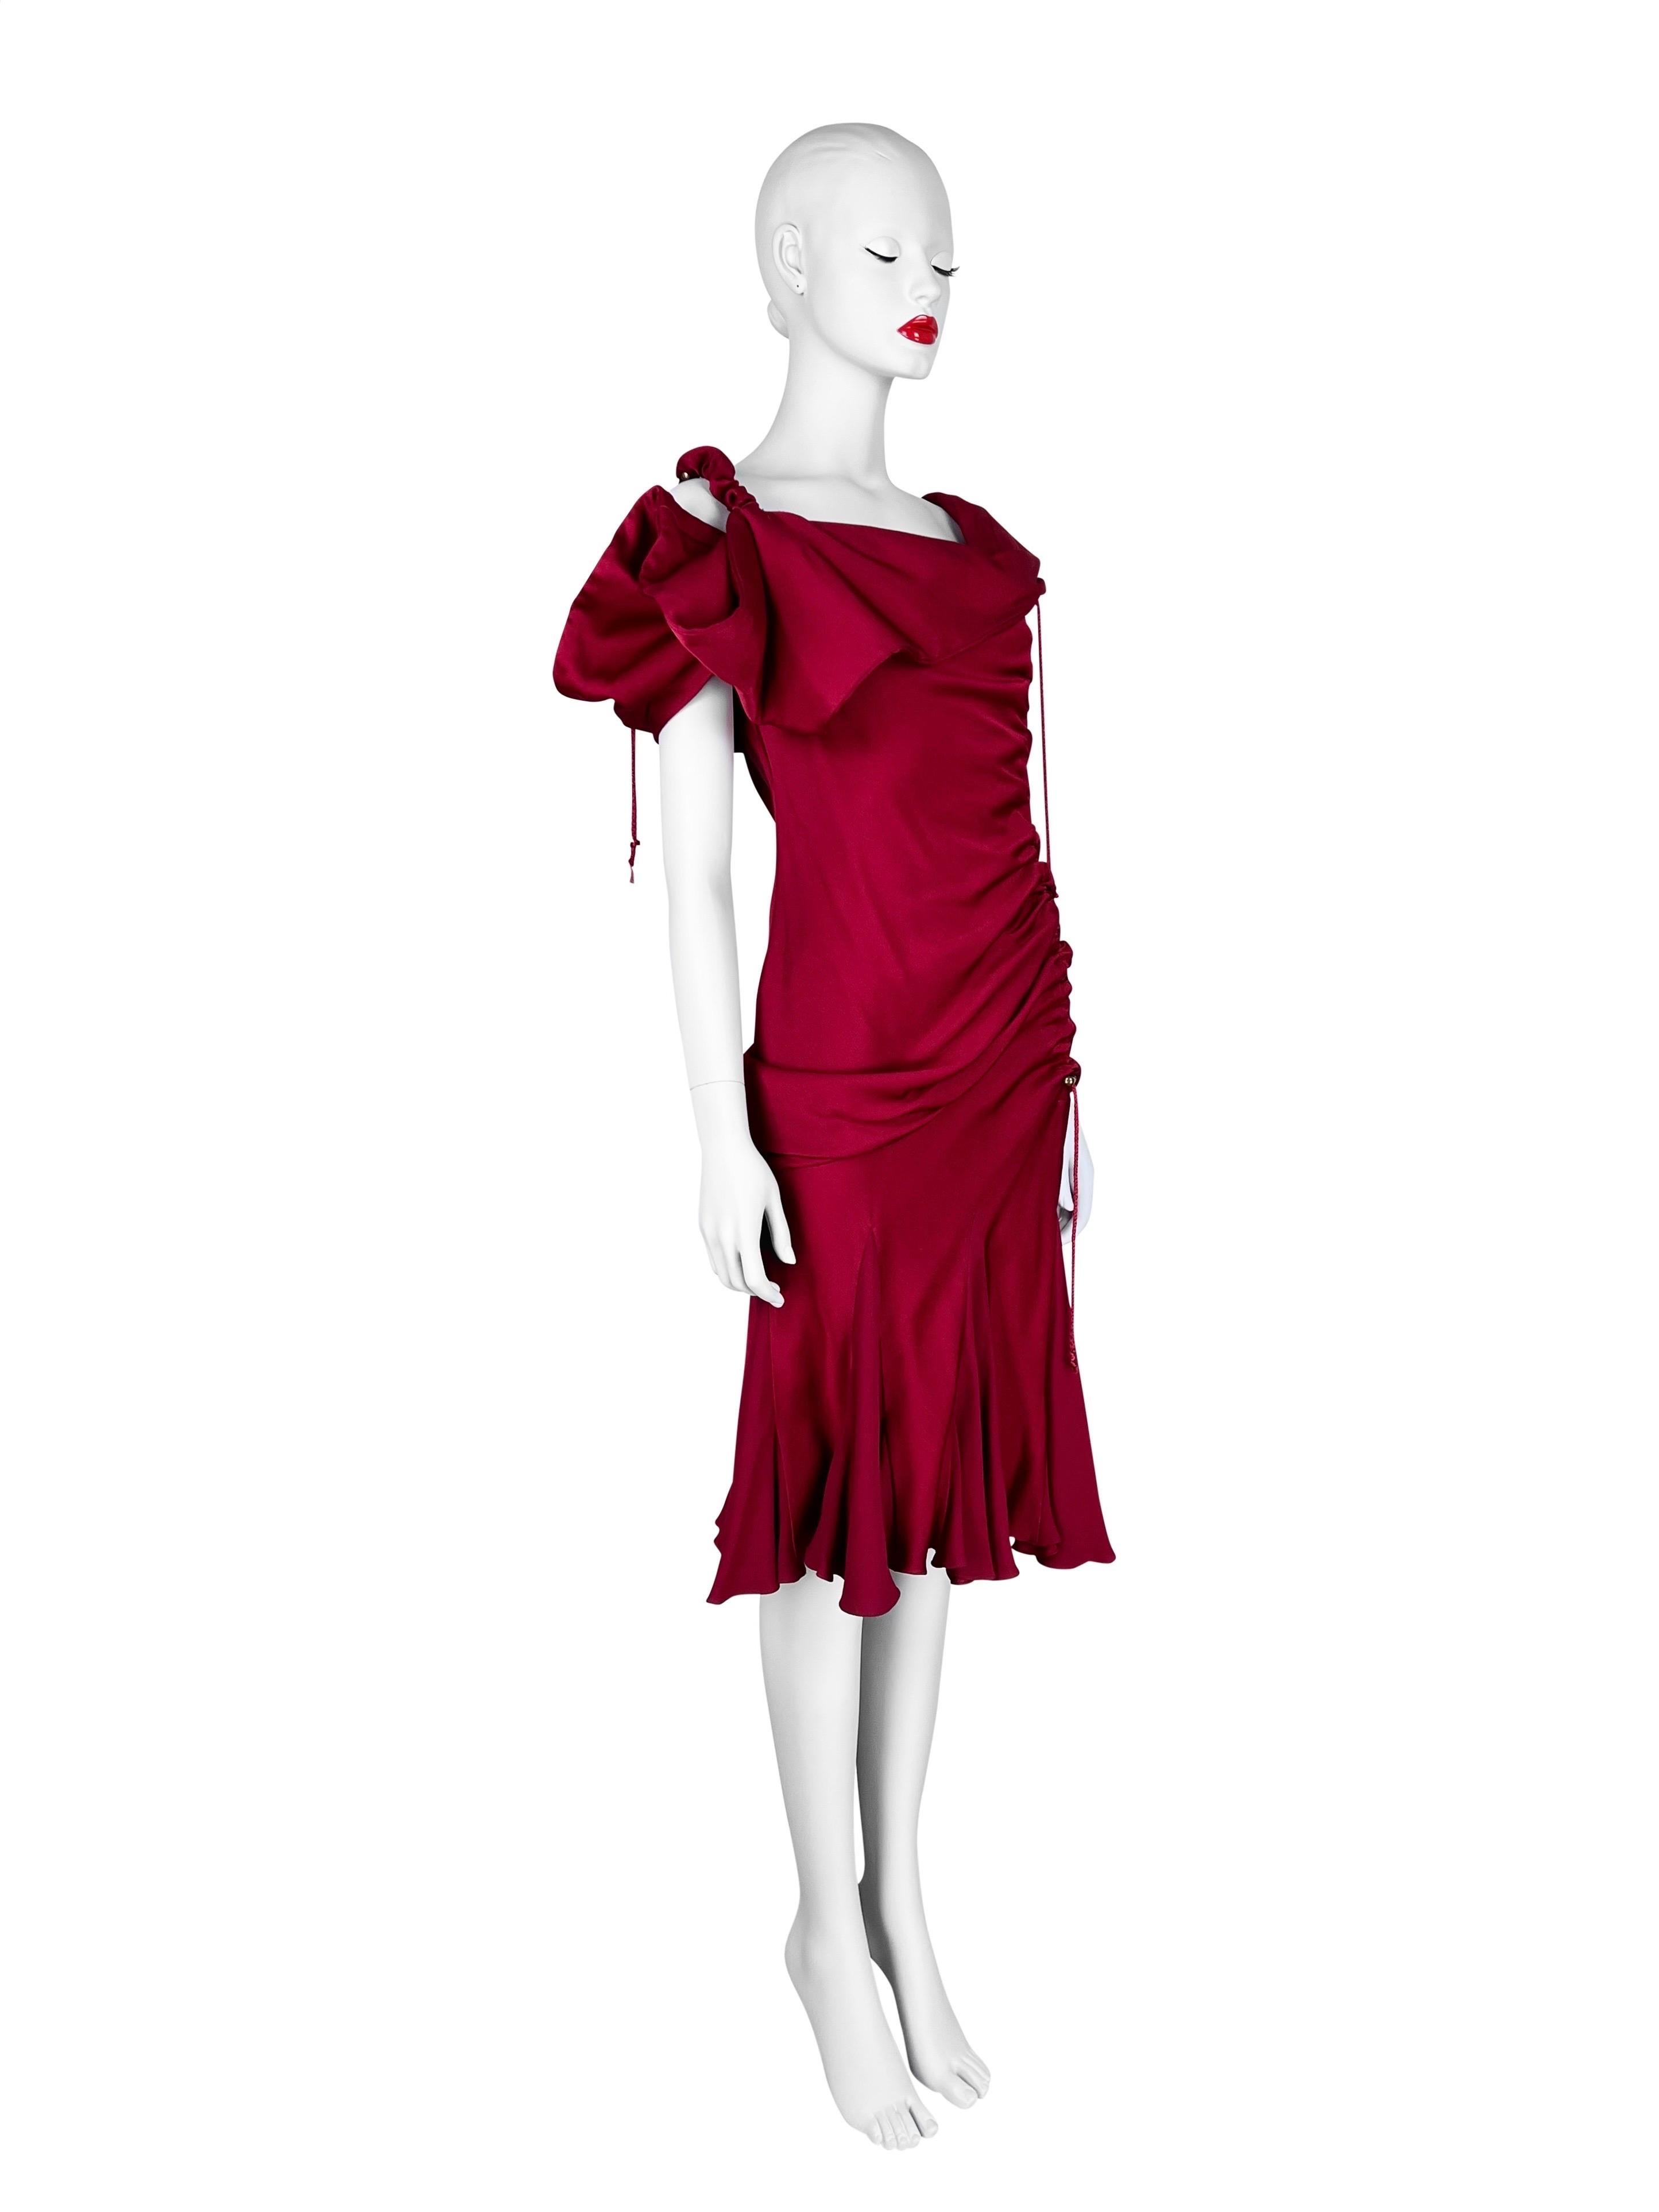 Women's John Galliano Fall 2002 Red Draped Dress For Sale